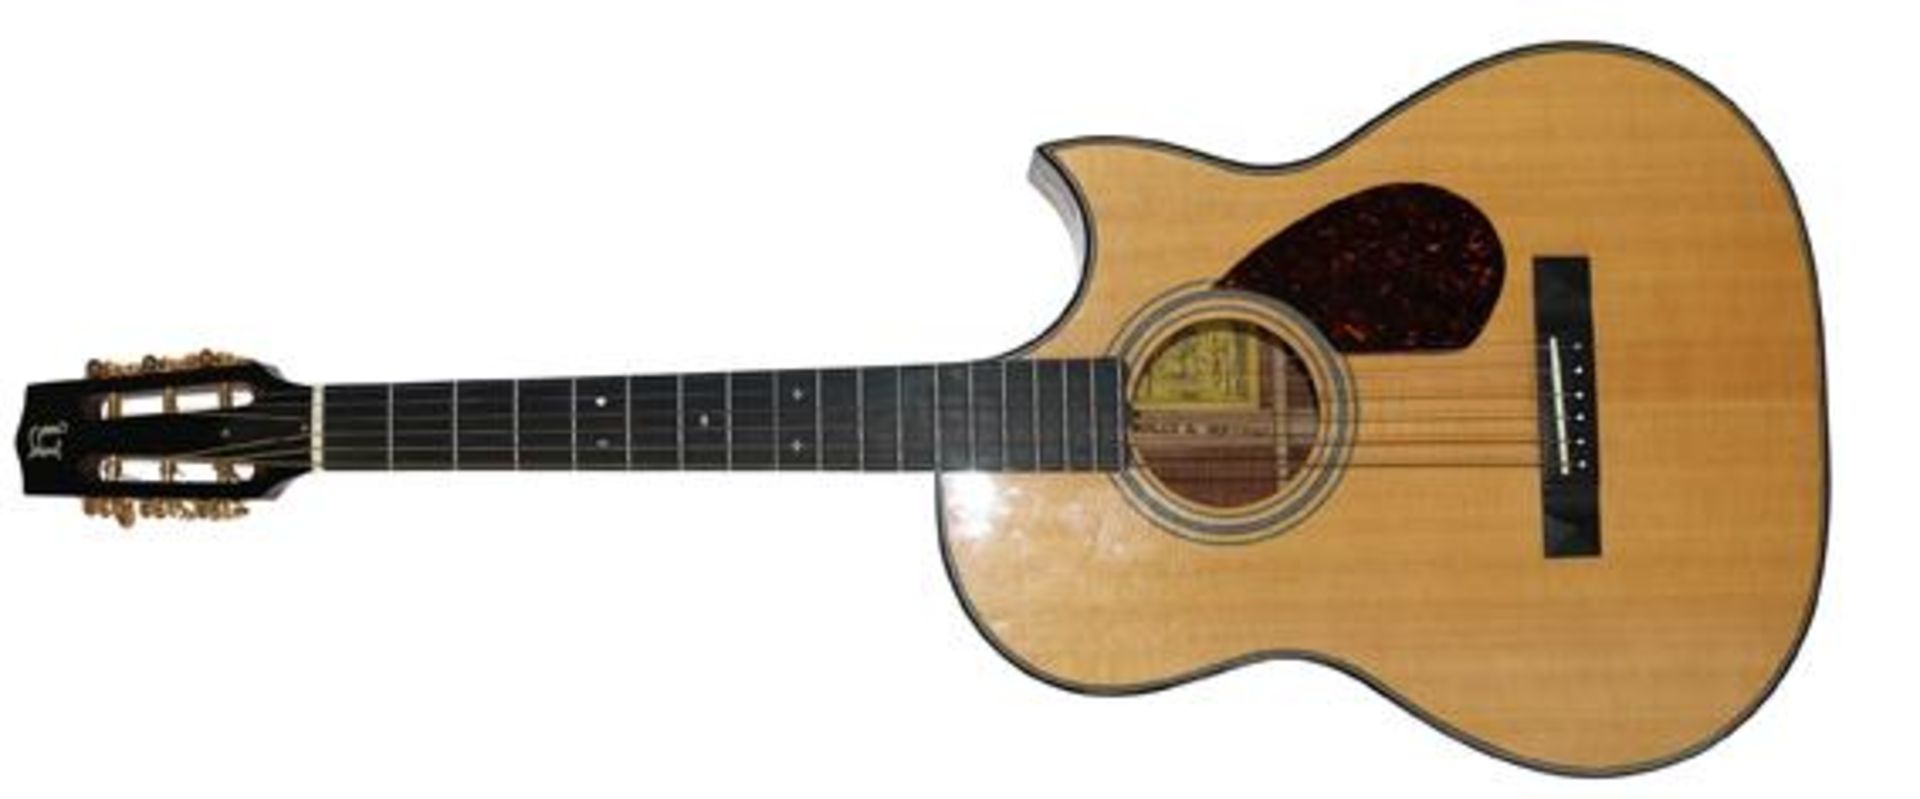 Hoffmann, Charles A.Gitarre Modell 12 Fret. Bj. 2000. Zustand mint. Im Original-Case.Seriennr.